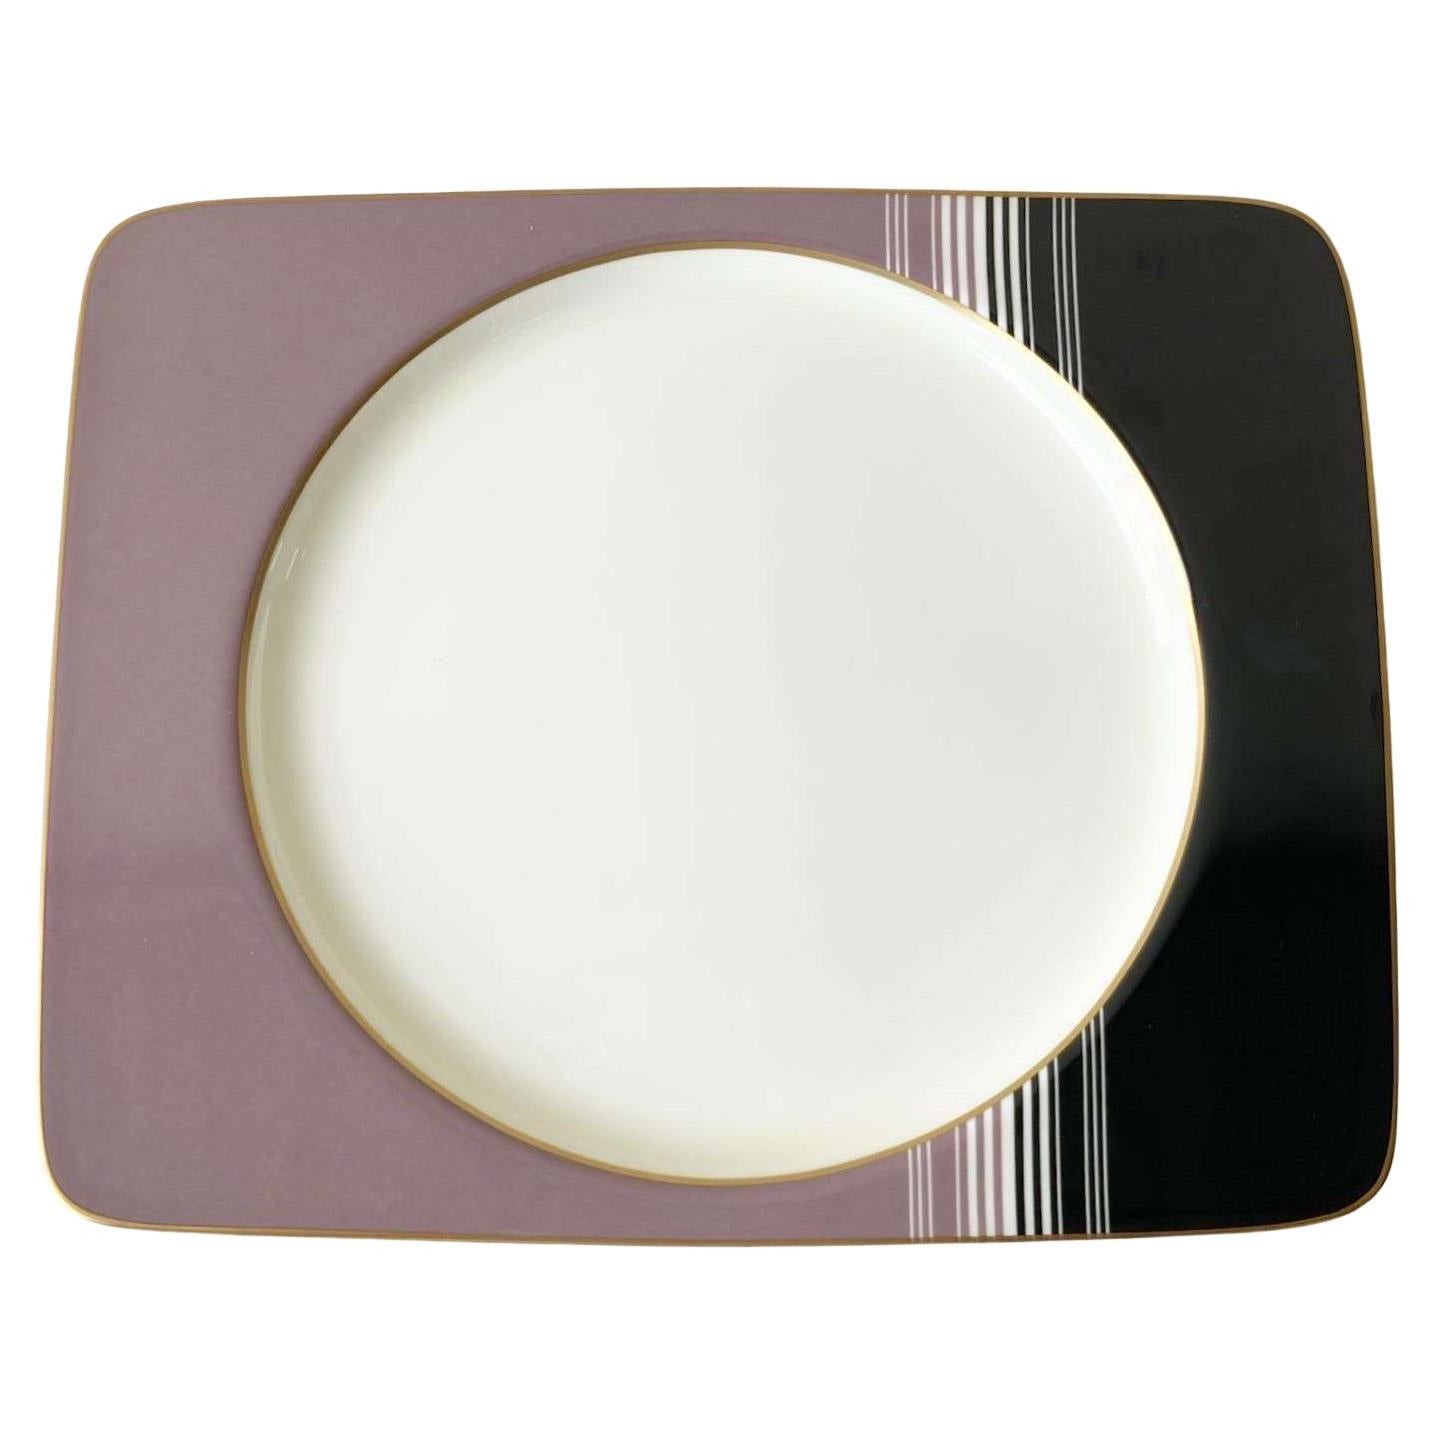 Postmodern Purple White and Black Serving Platter by Daniel Hechter